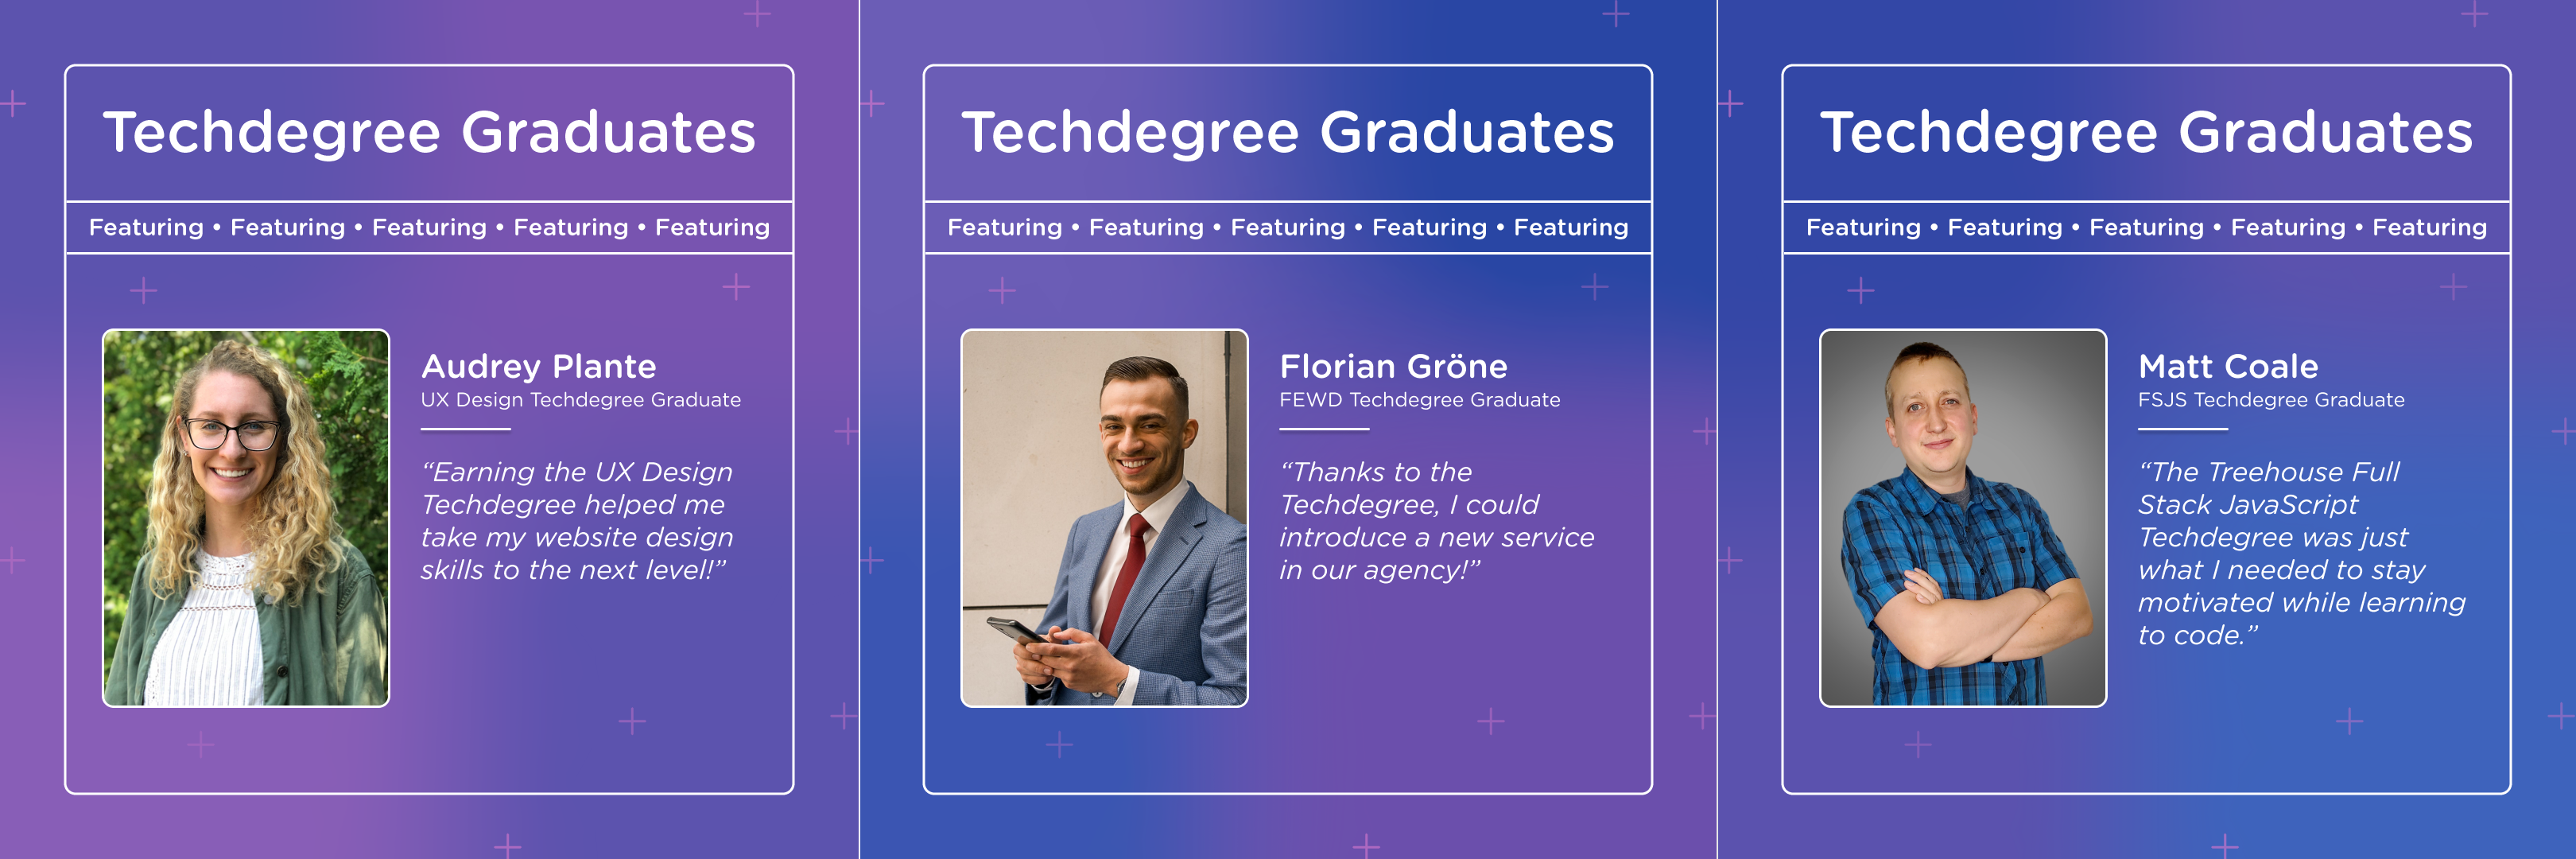 Techdegree Graduate Spotlight